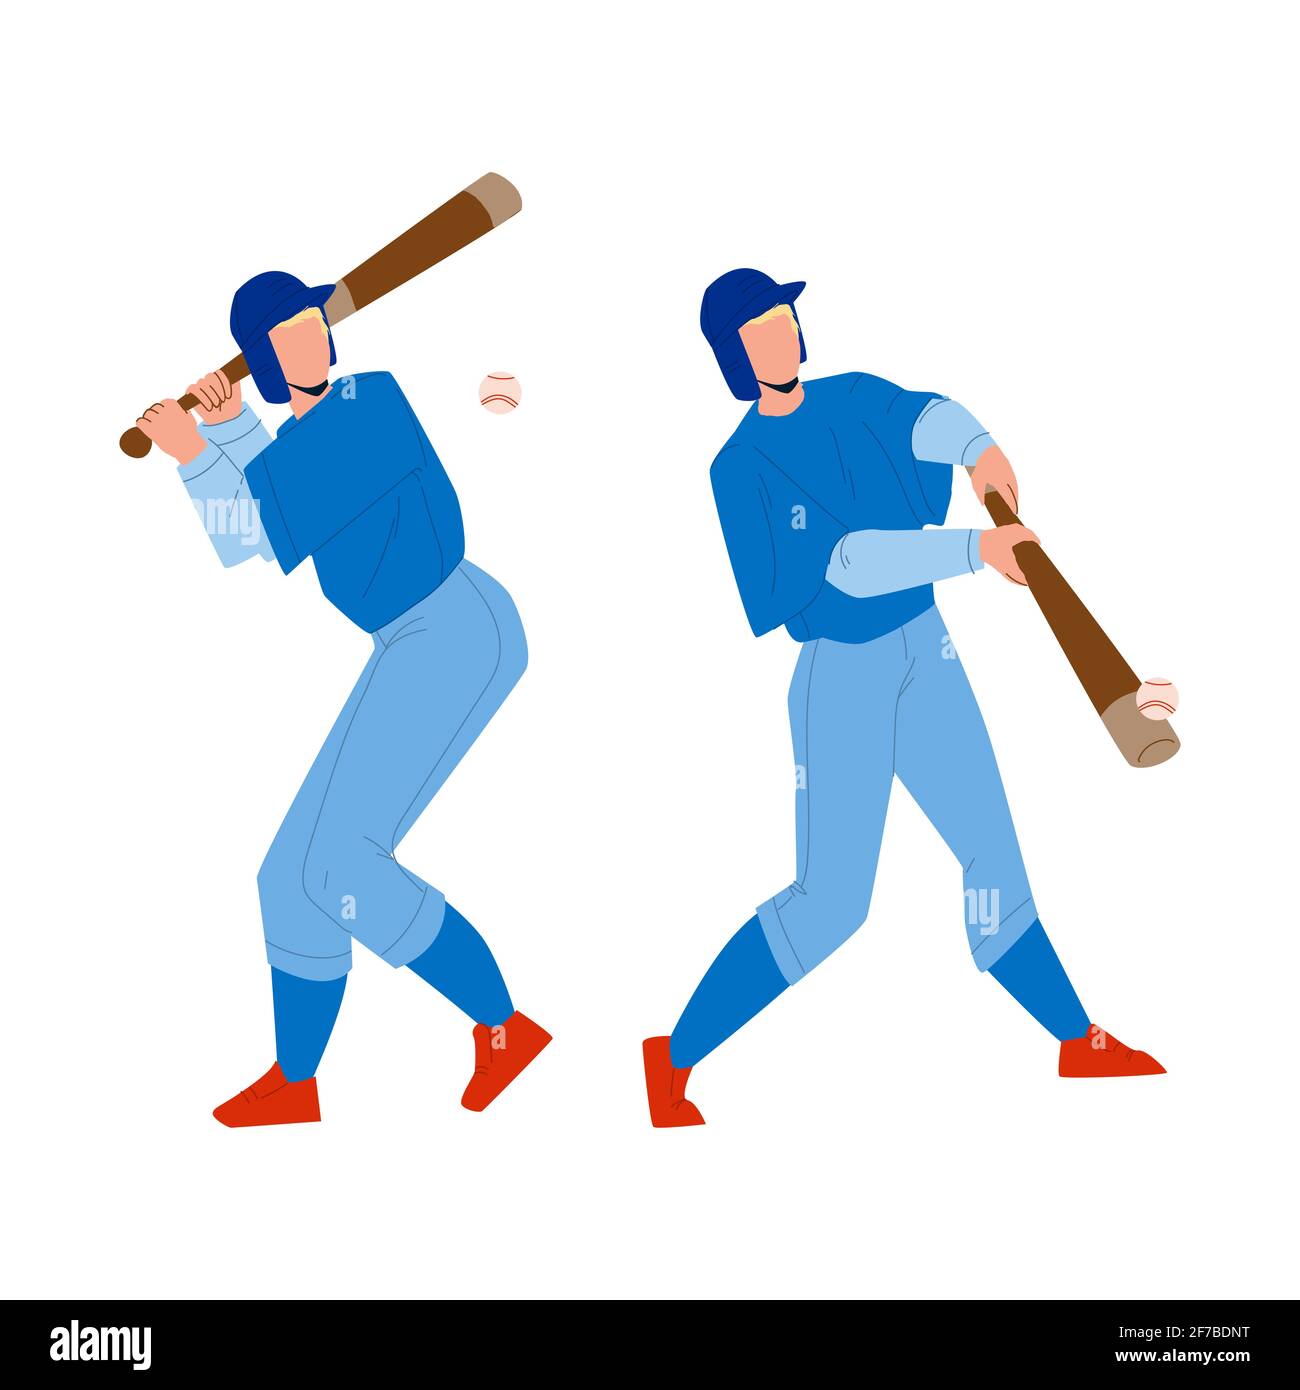 Baseball Player Hit Ball With Bat On Field Vector Stock Vector Image & Art  - Alamy